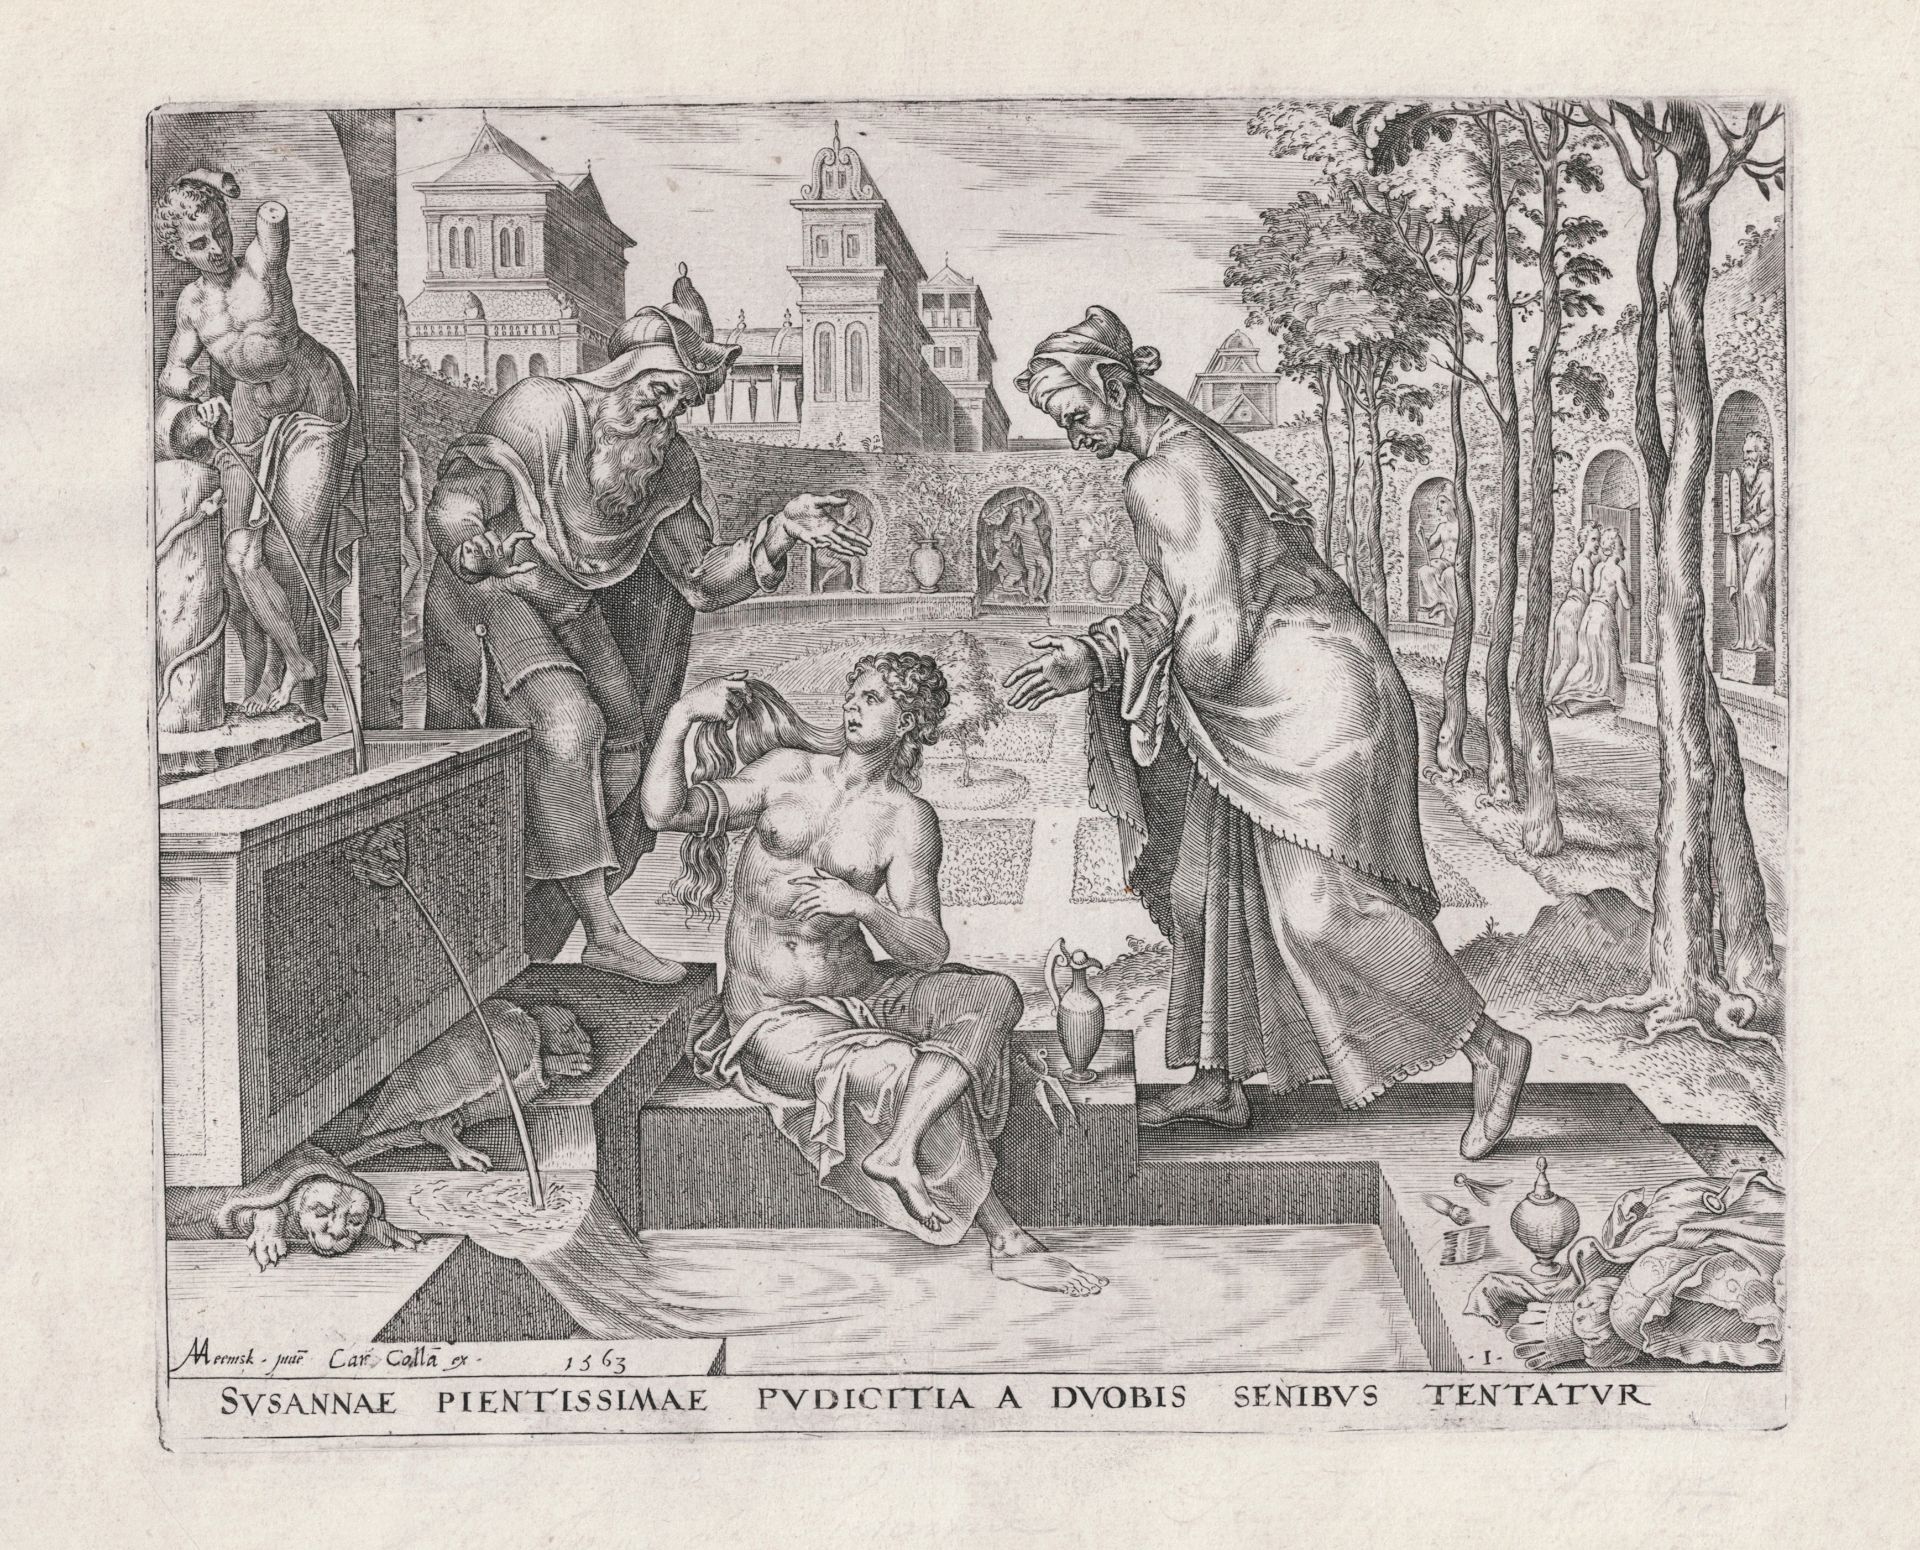 Maerten van Heemskerck (1498-1574), Philips Galle (1537-1612), Carolus Galle 